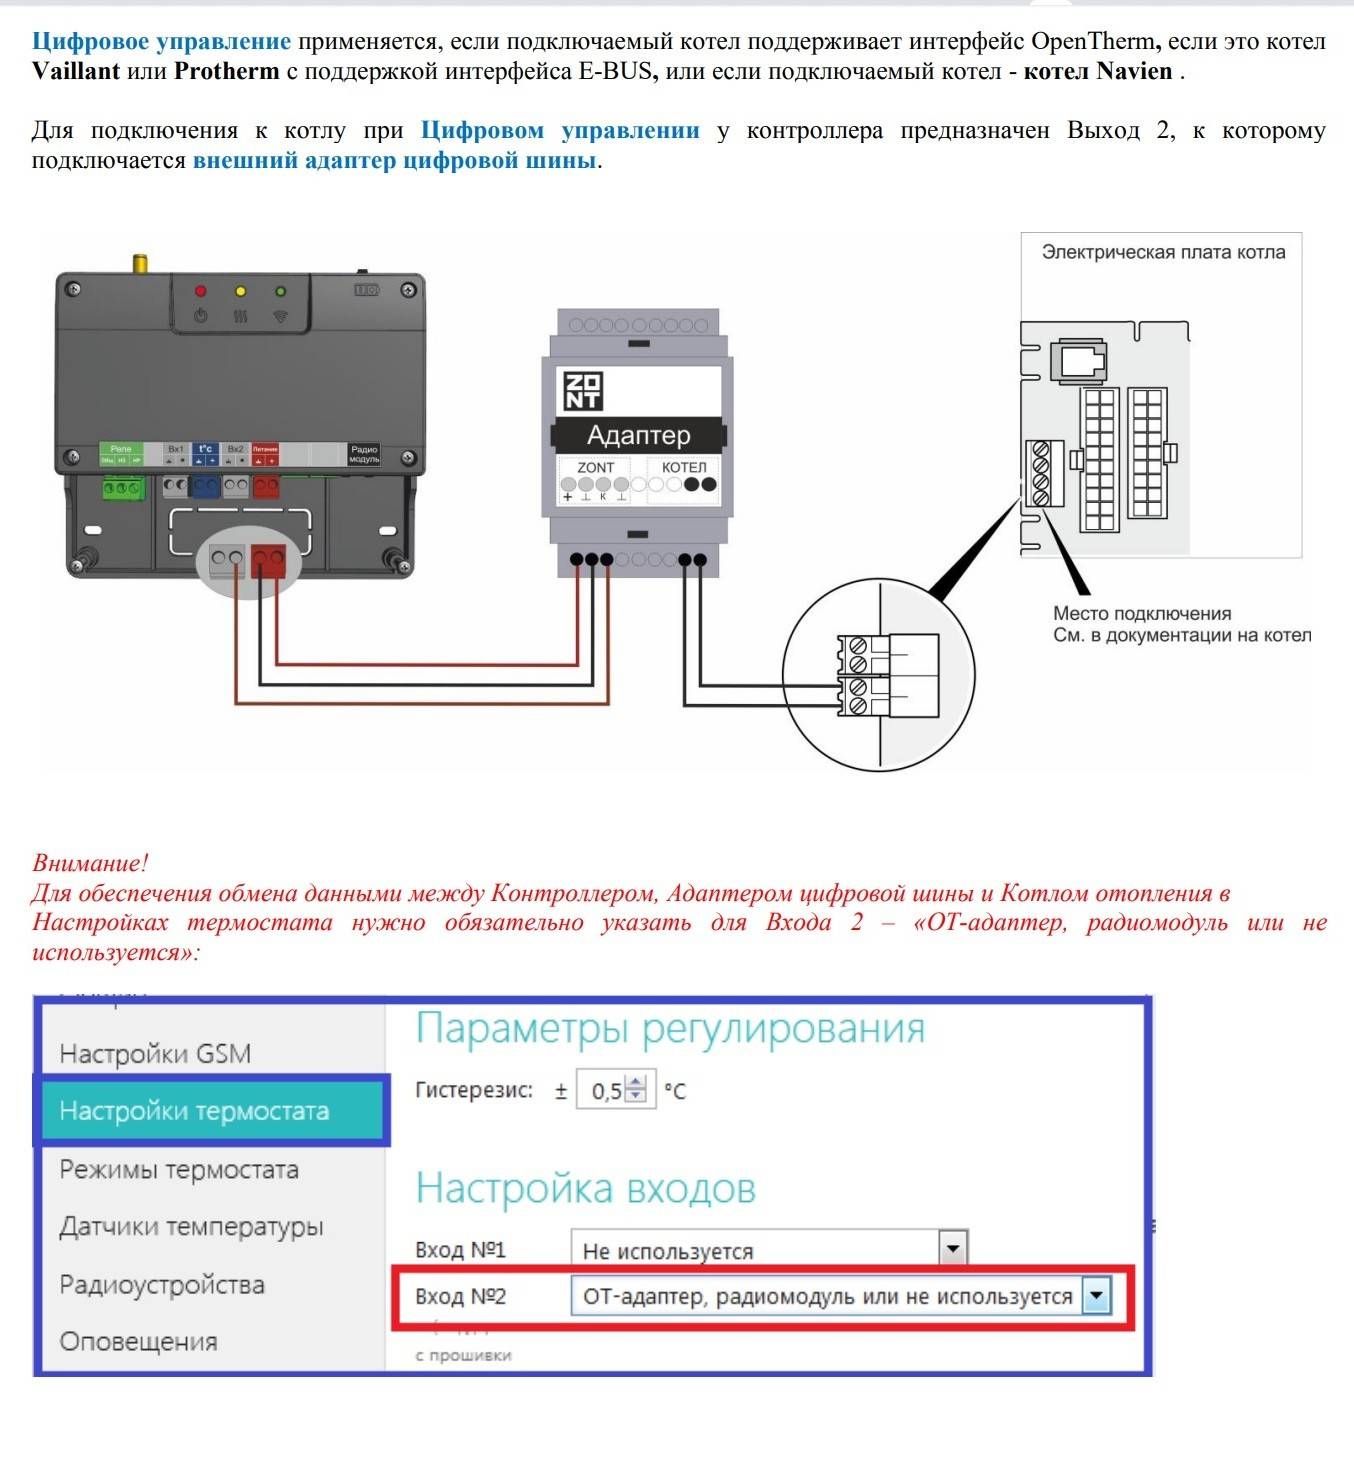 Обозначение кодов ошибок газового котла protherm (протерм)